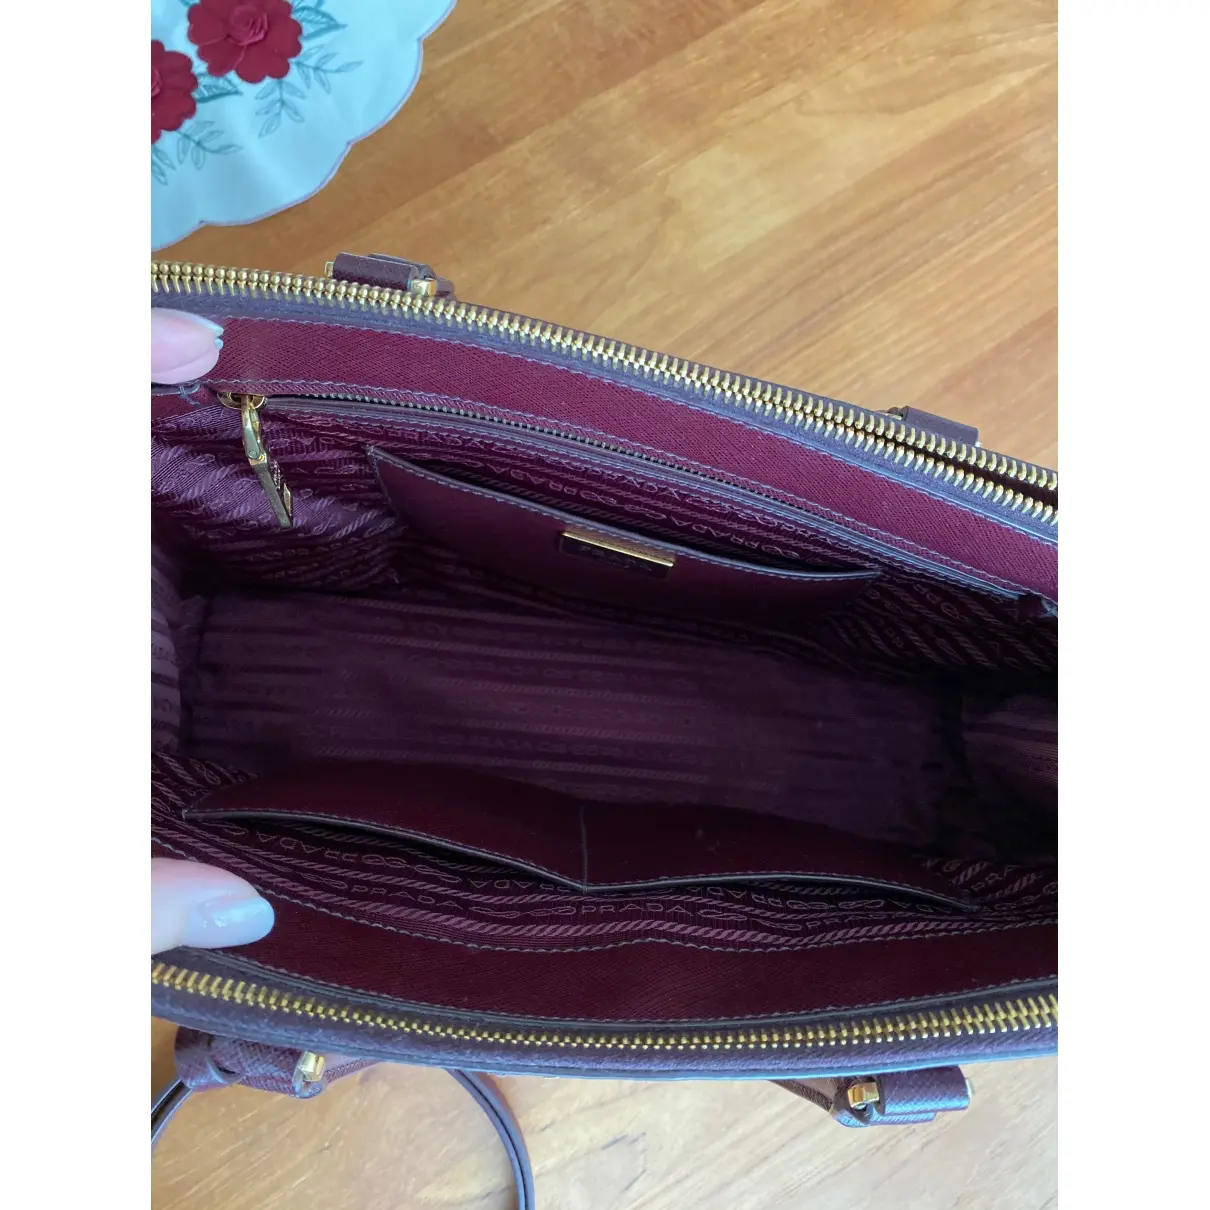 Prada Galleria leather handbag for sale